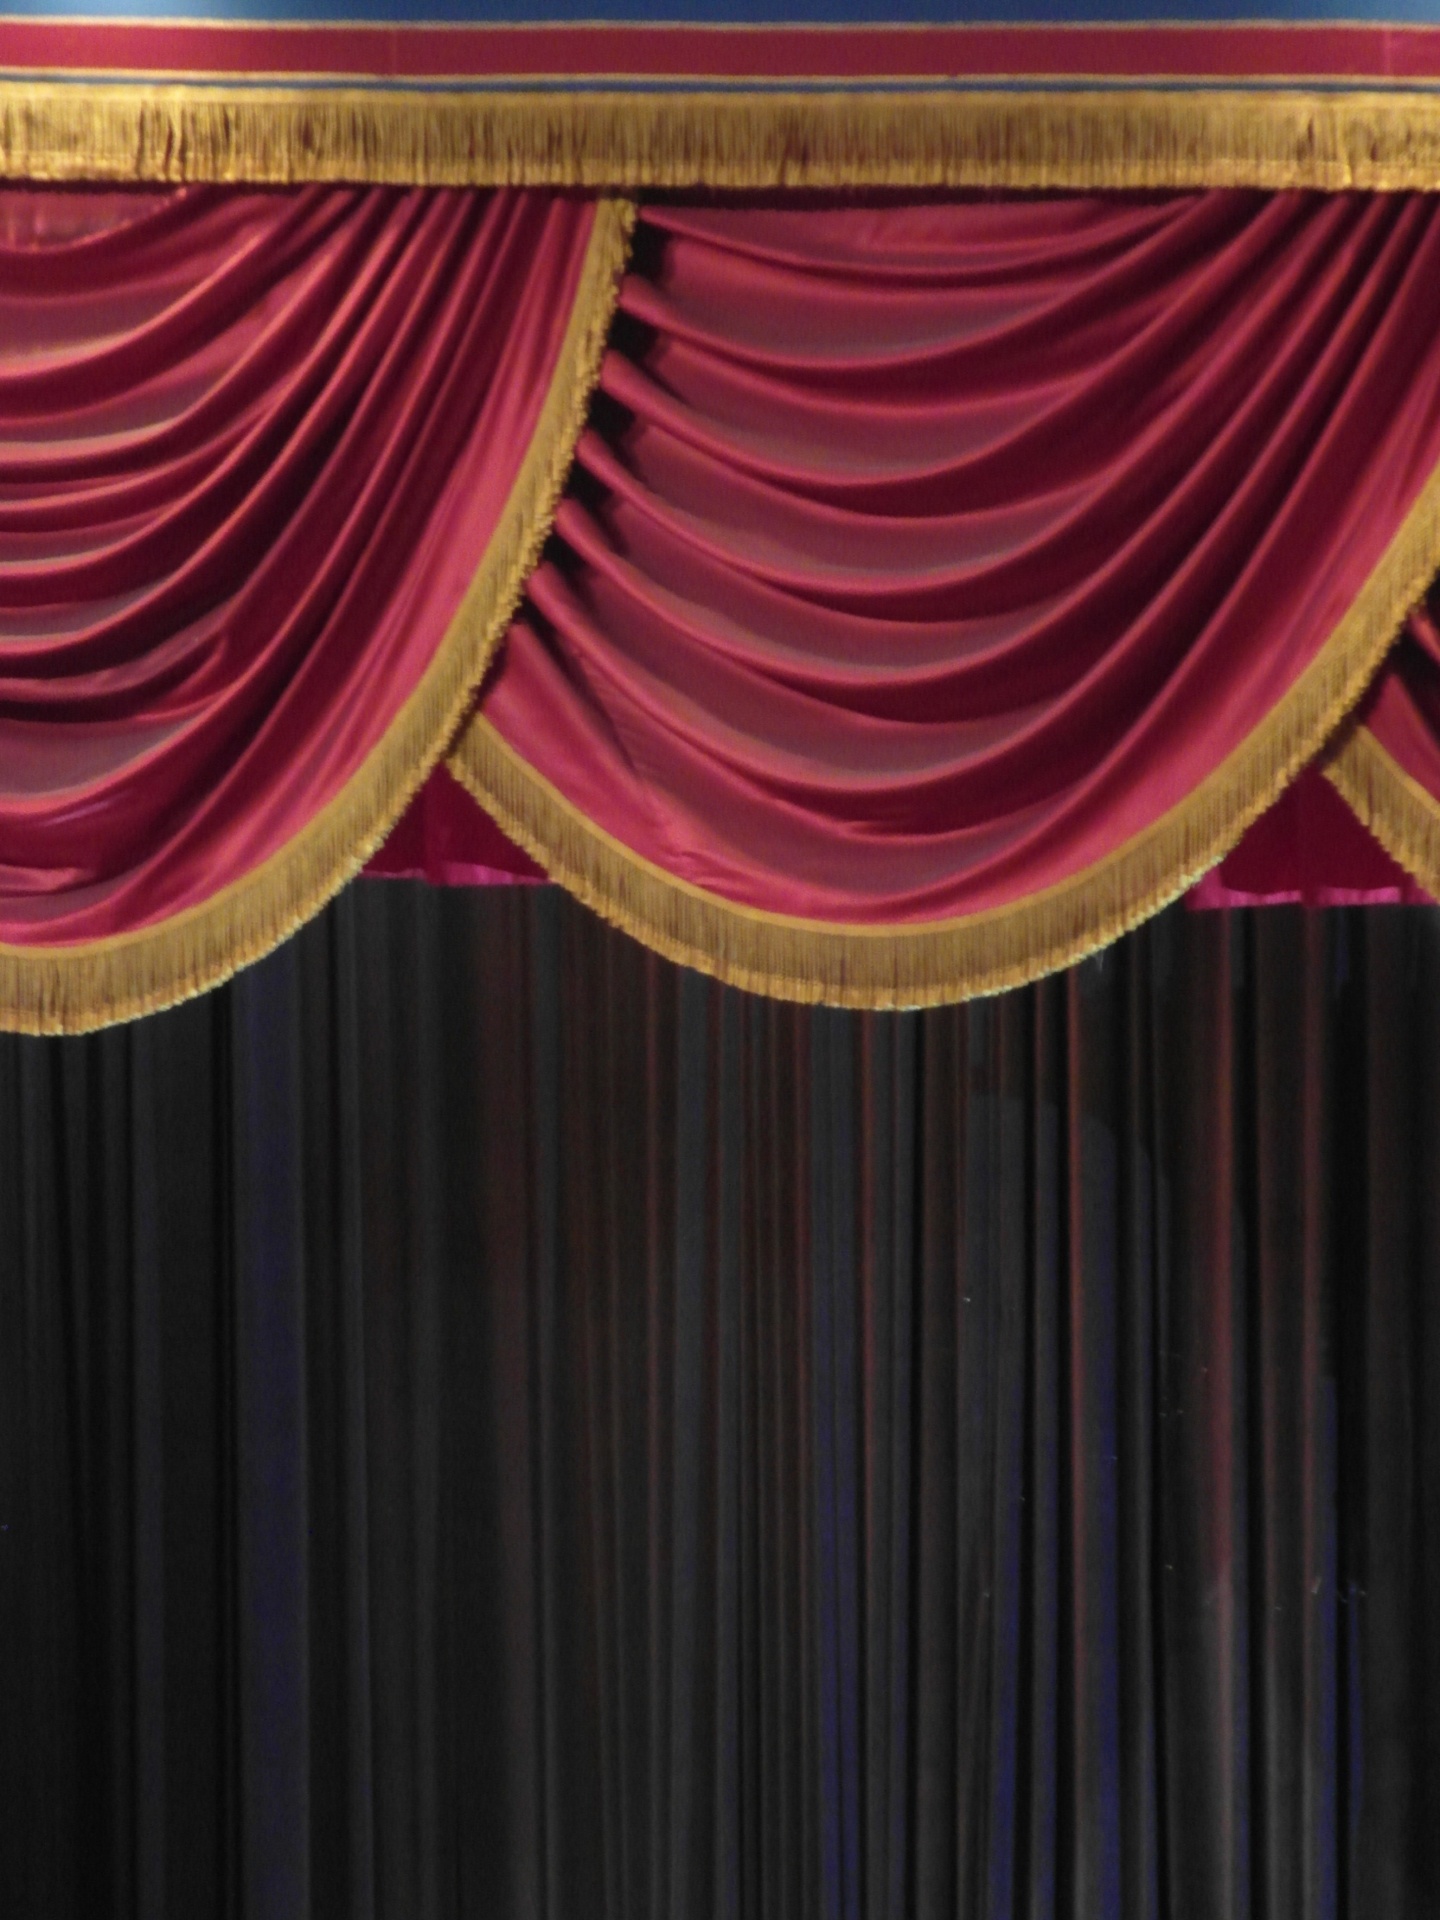 stage cinema curtain free photo